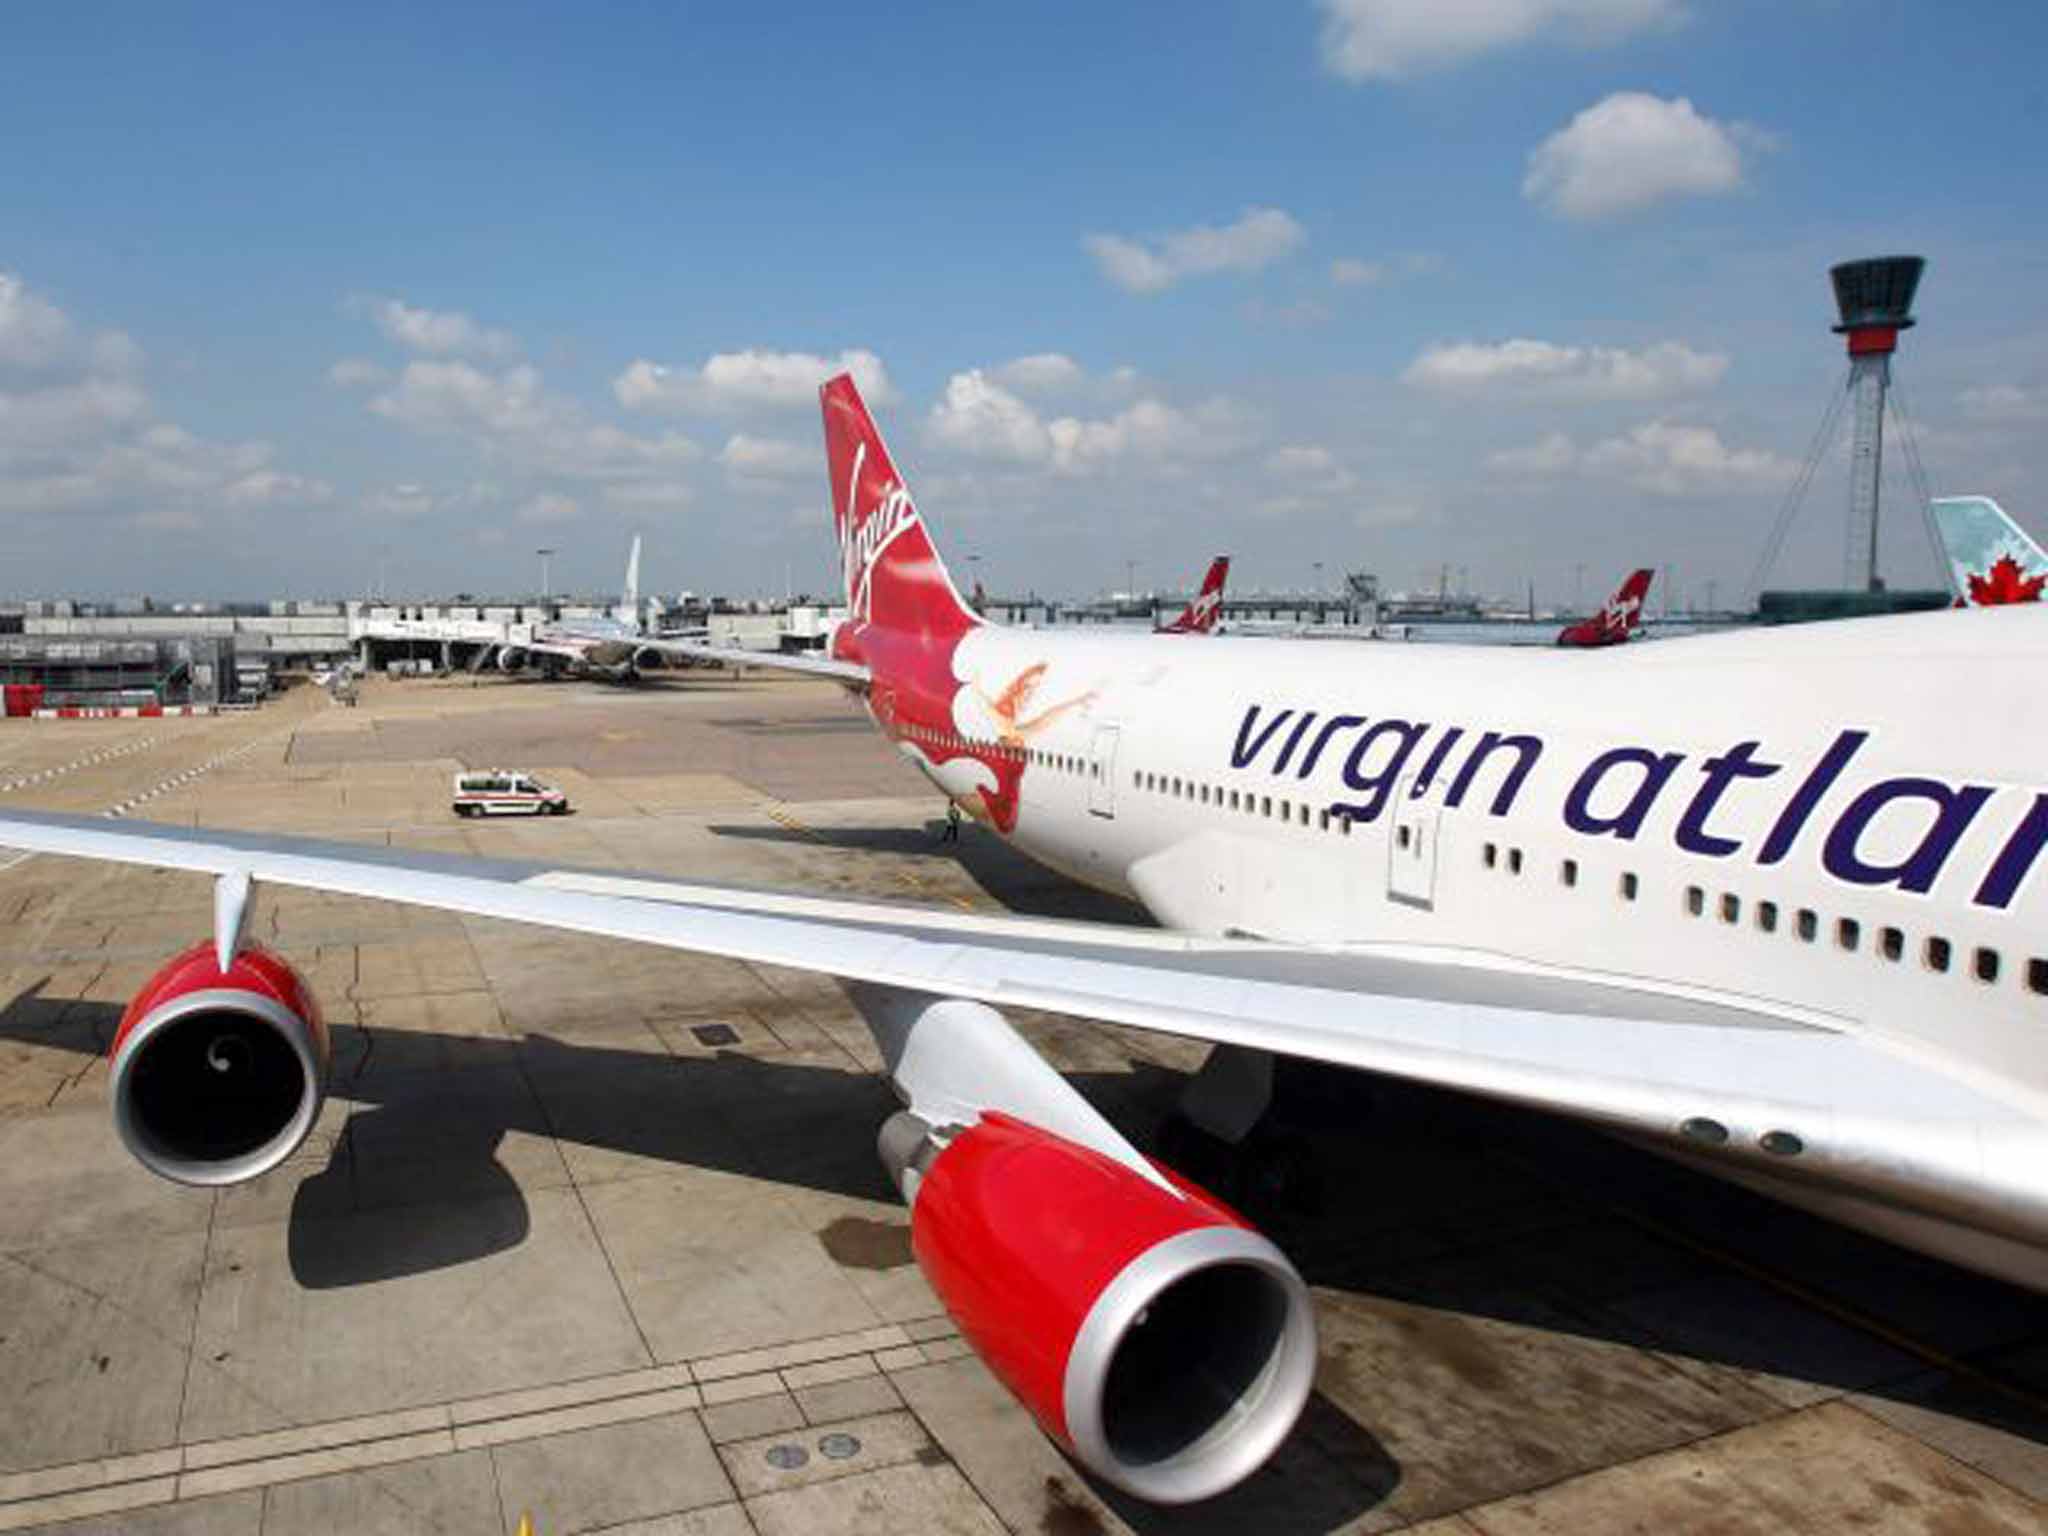 Richard Branson Remembers Virgin Atlantic's First Flight 38 Years